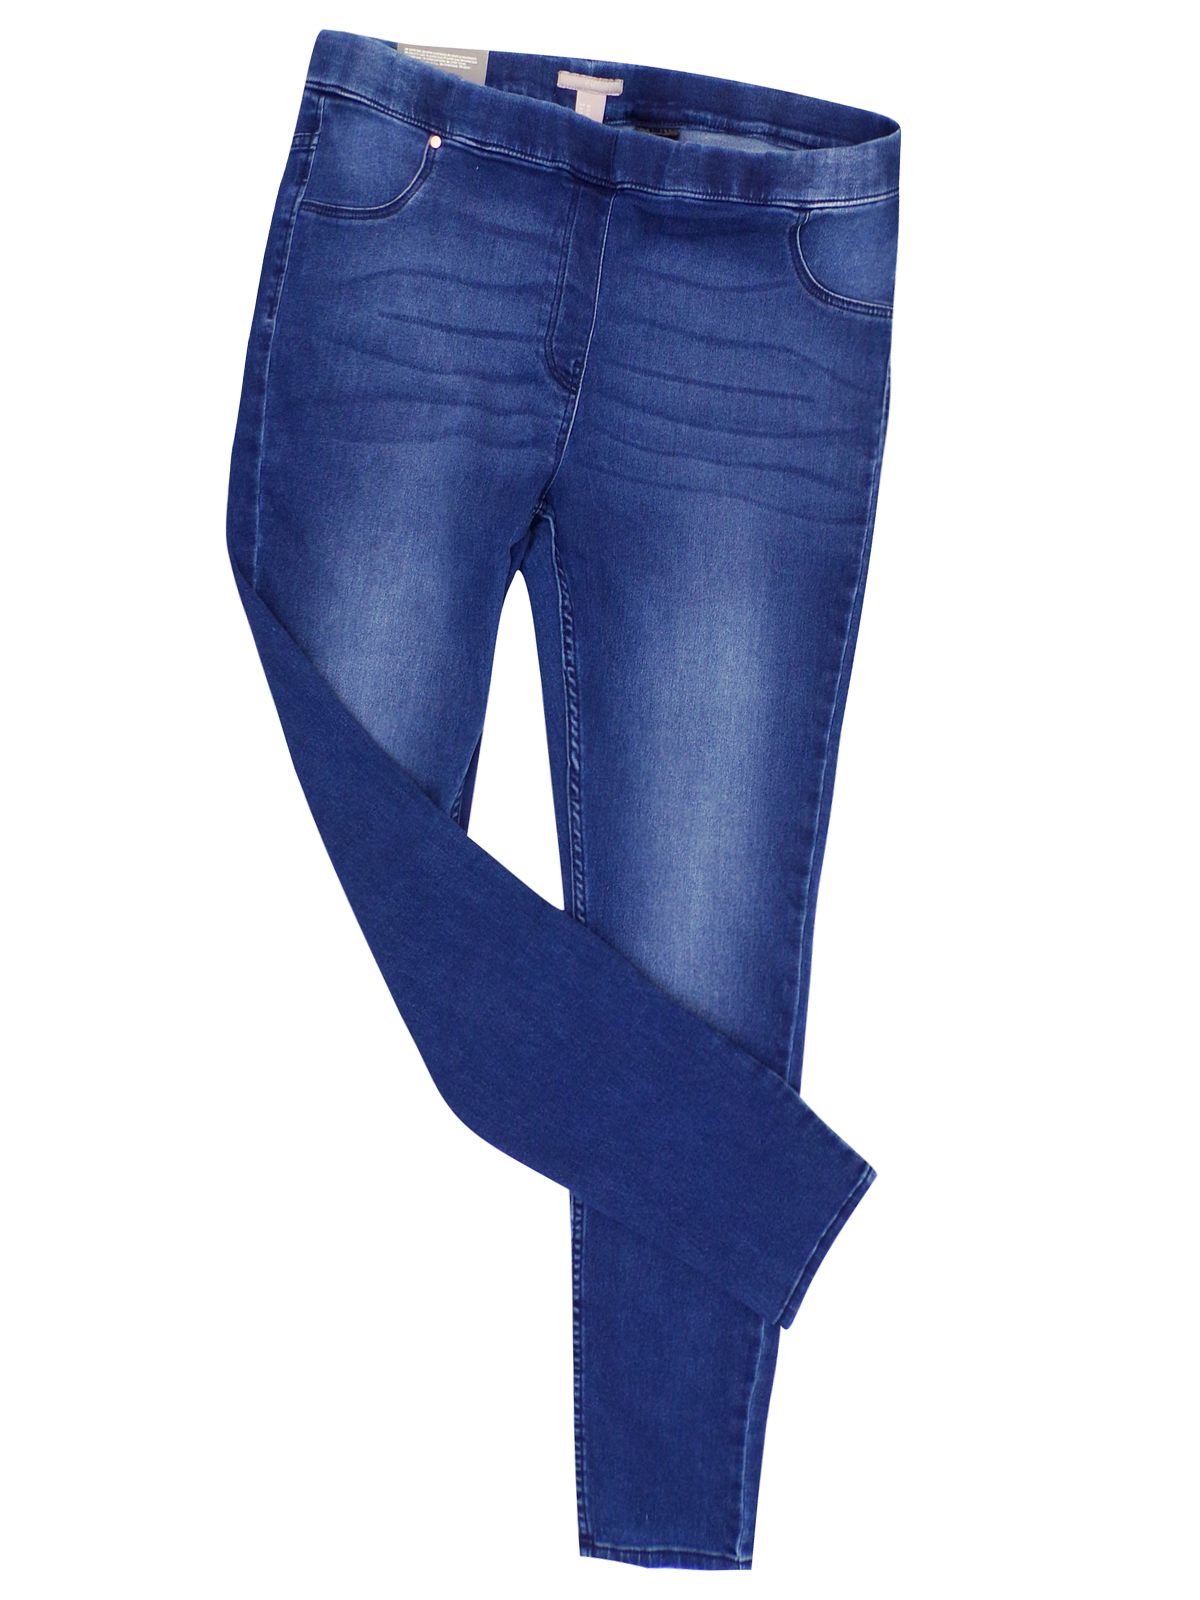 H&M DENIM-BLUE Super Slim Pull On Jeggings - Plus Size 22